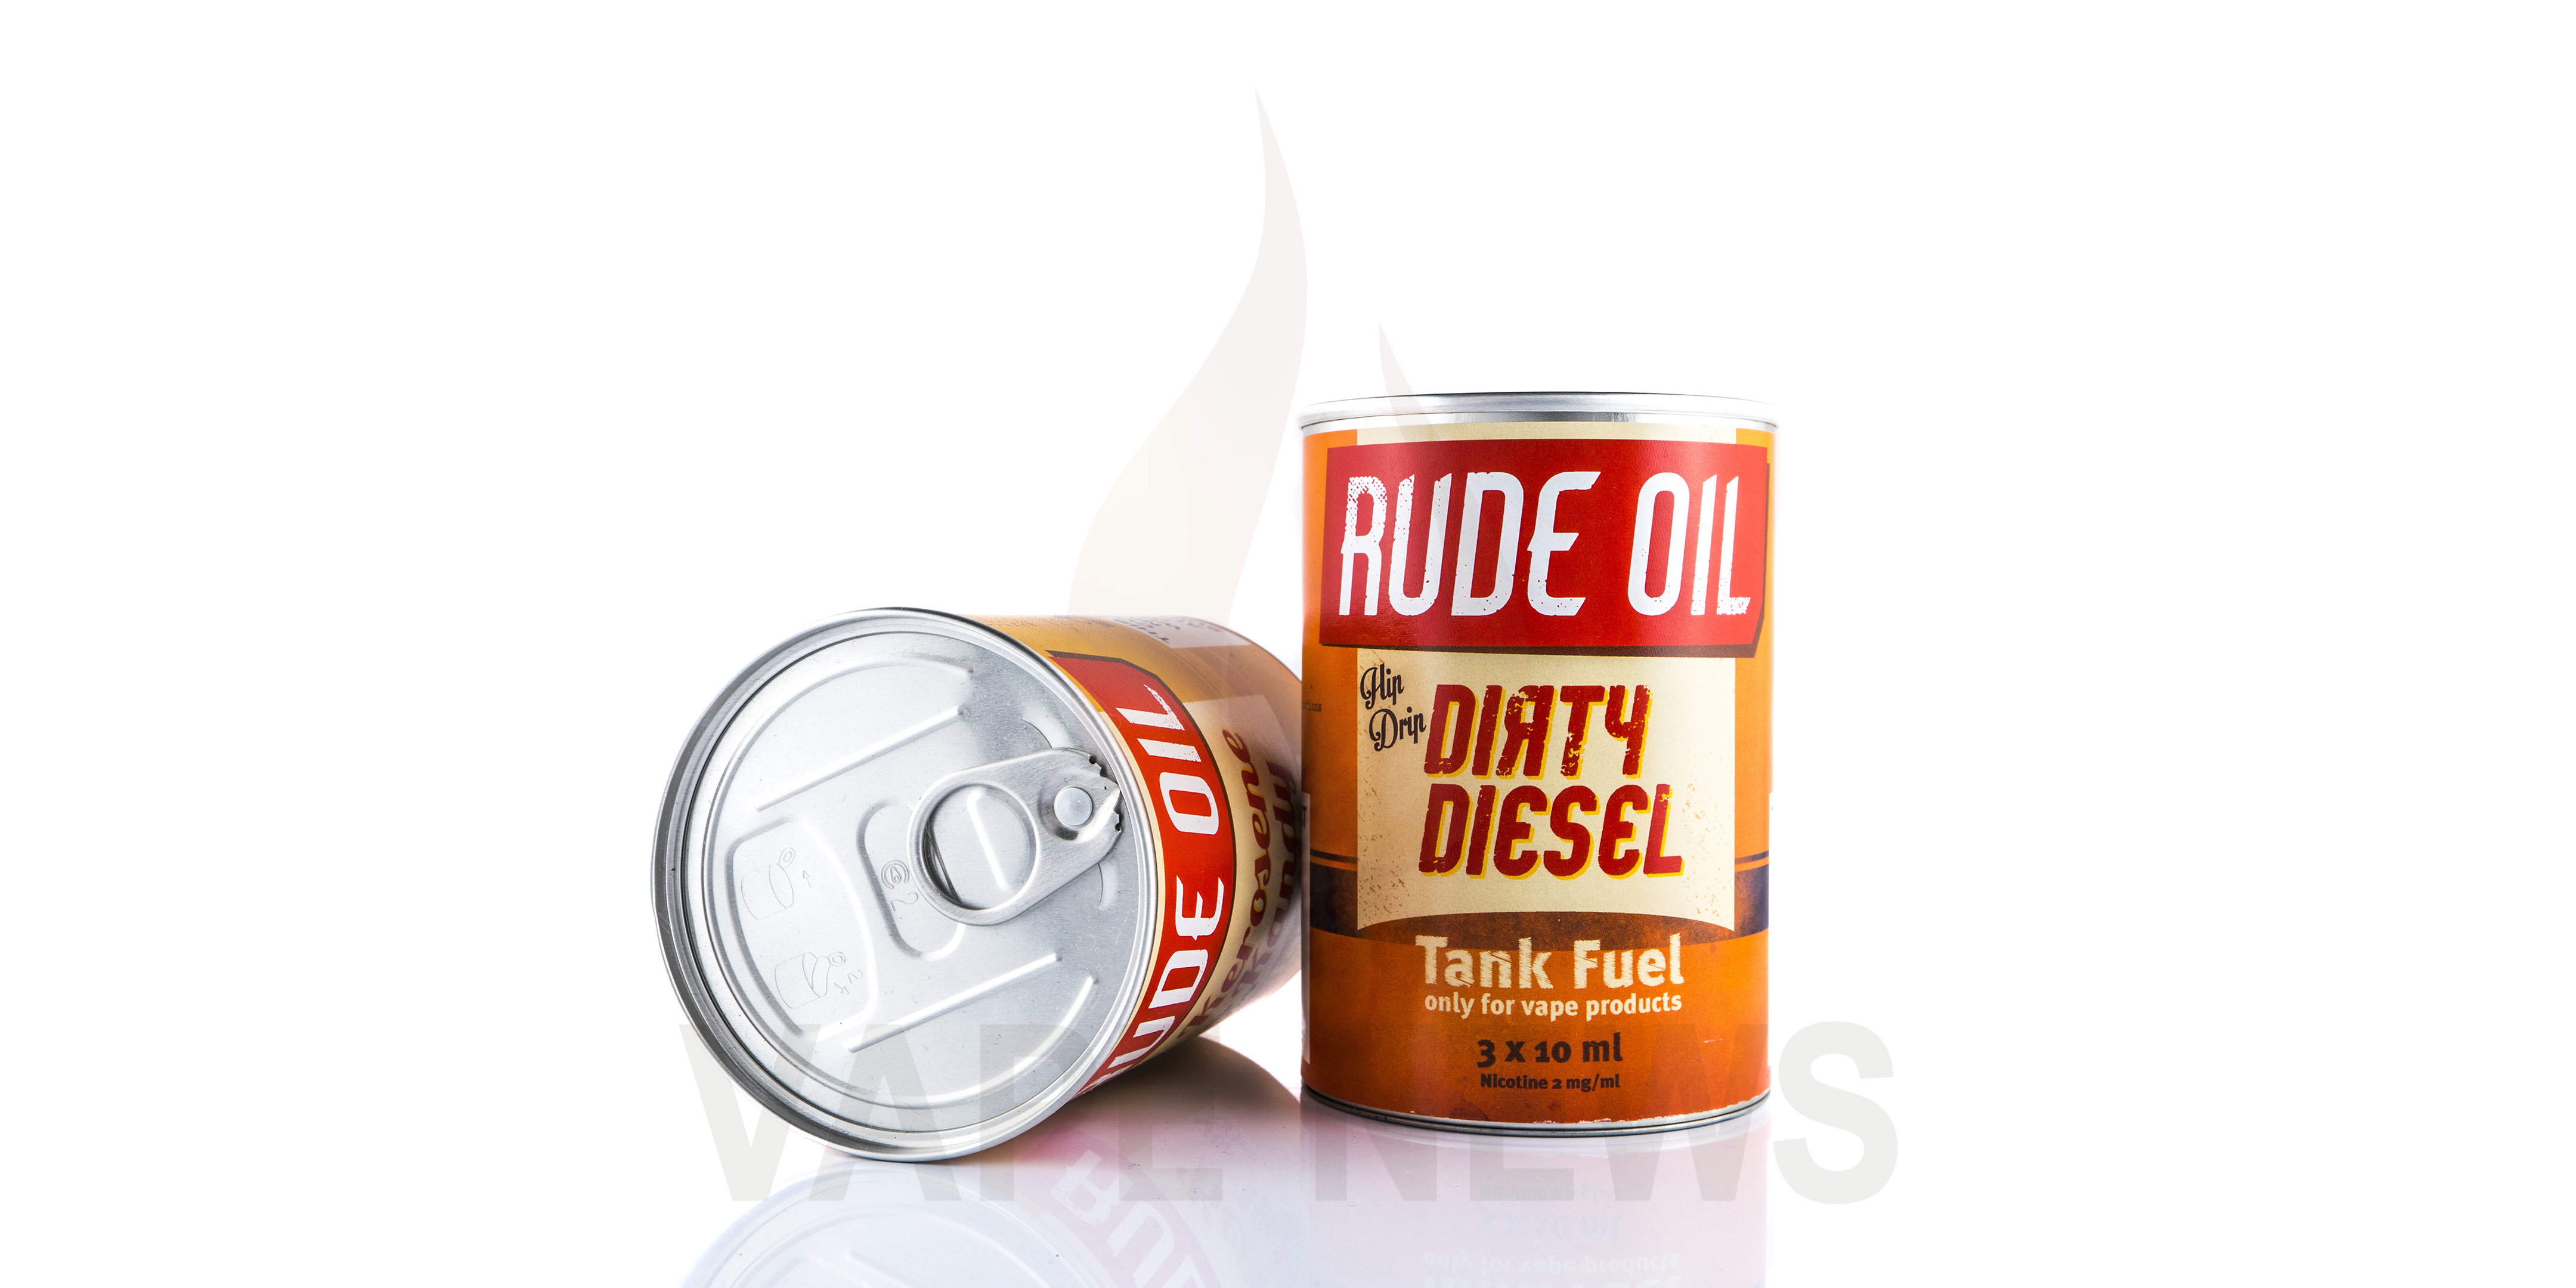 Rude Oil Tank Fuel Dirty Diesel и Kerosene Candy - любопытнейшие жидкости родом из UK